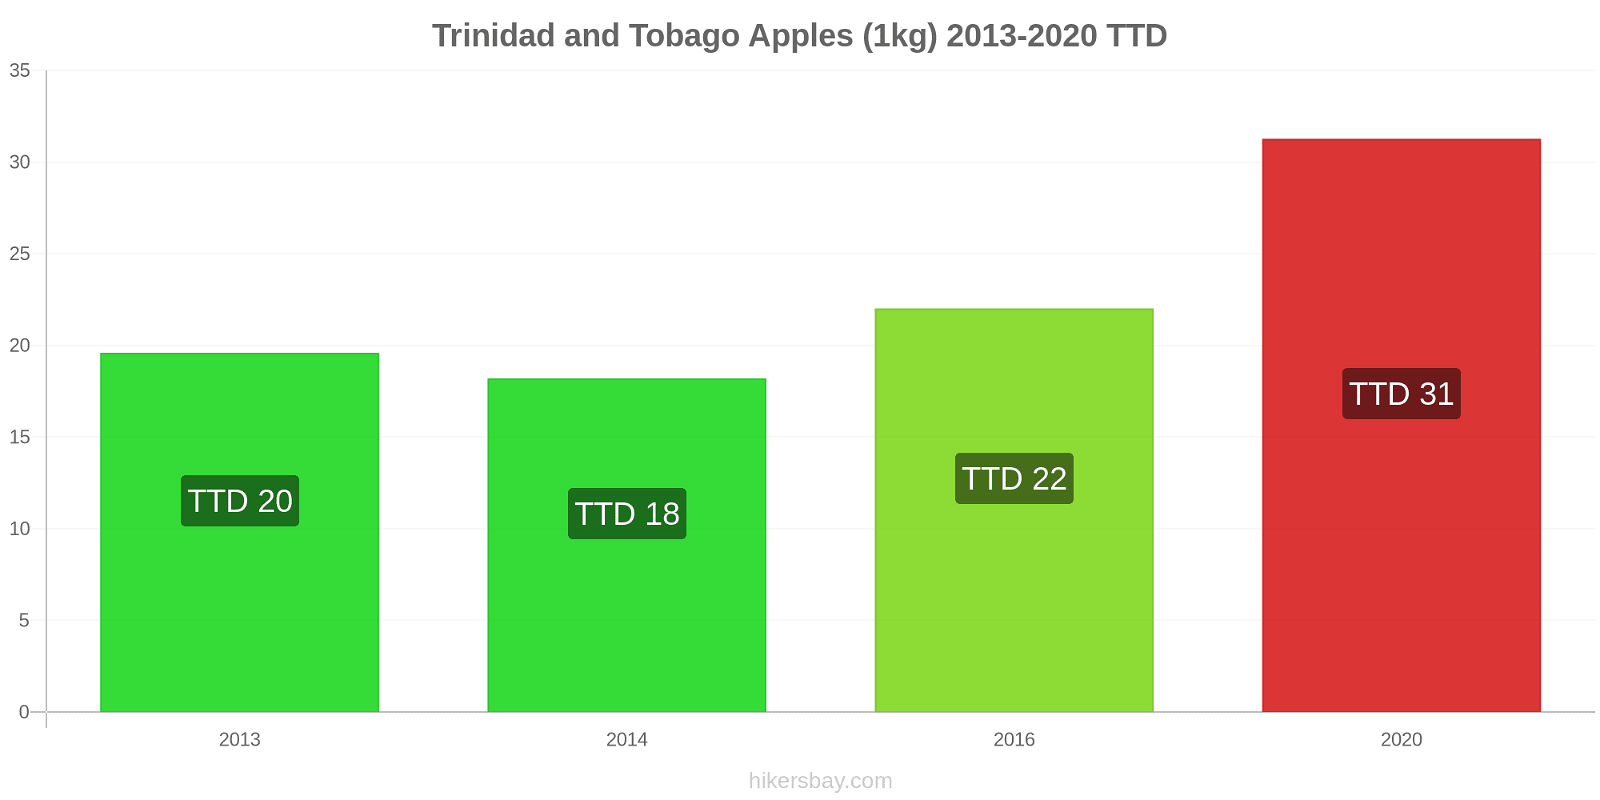 Trinidad and Tobago price changes Apples (1kg) hikersbay.com